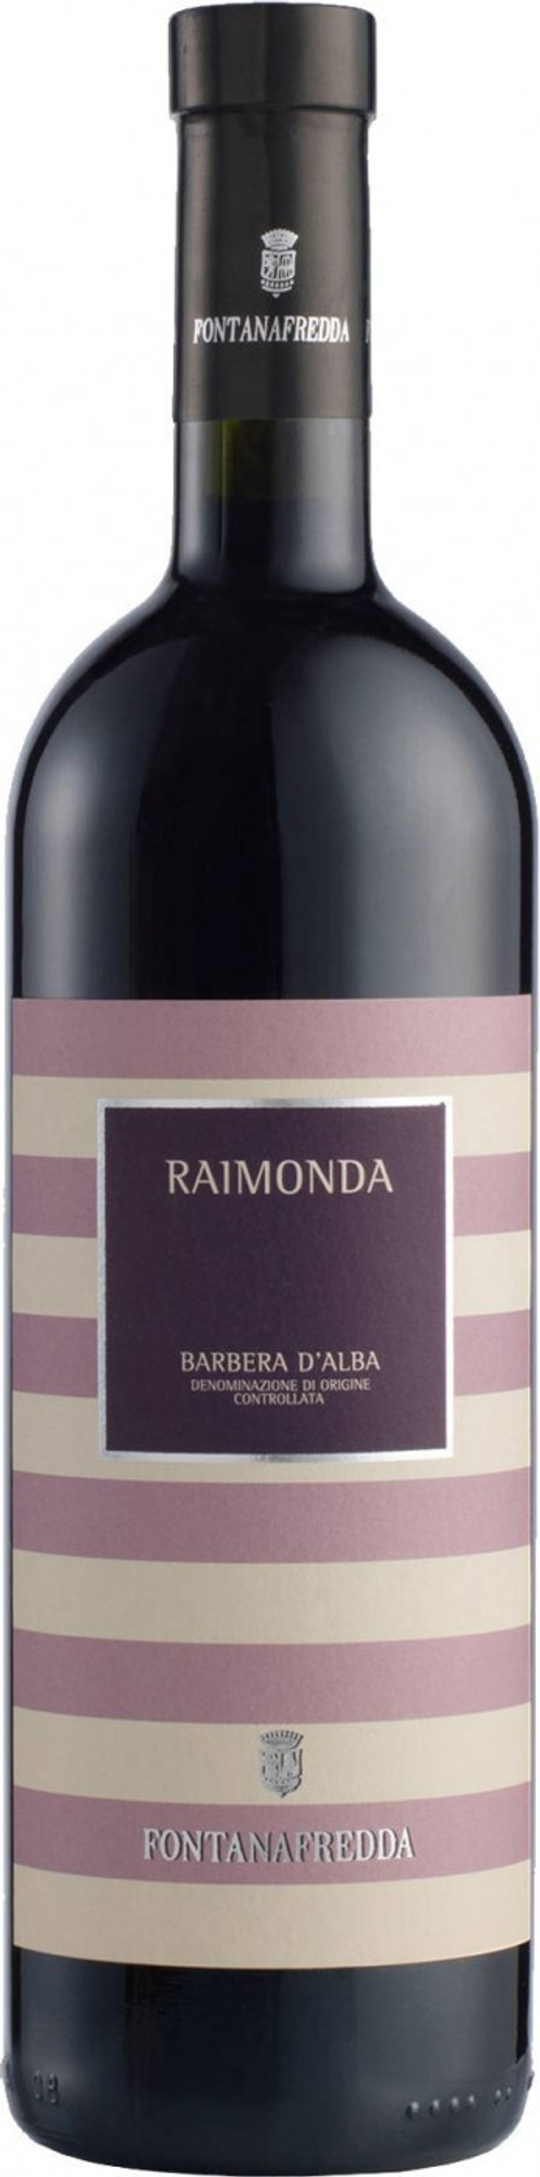 Вино Fontanafredda Raimonda Barbera d'Alba DOCG, 0,75 л.